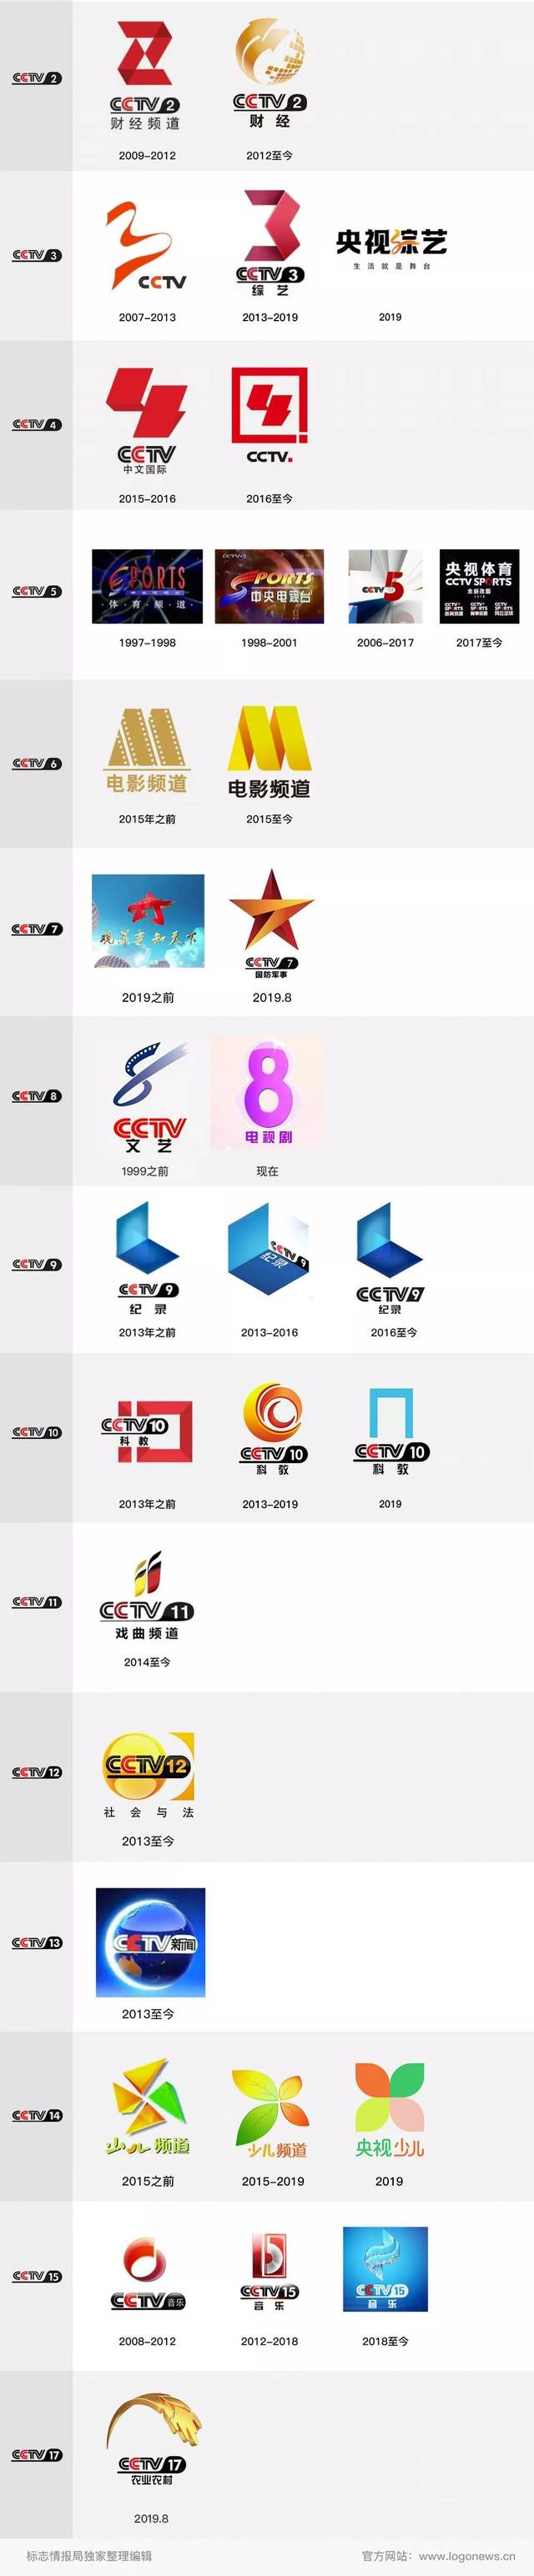 logo | cctv央视一口气换了3个频道新logo!网友直呼漂亮!